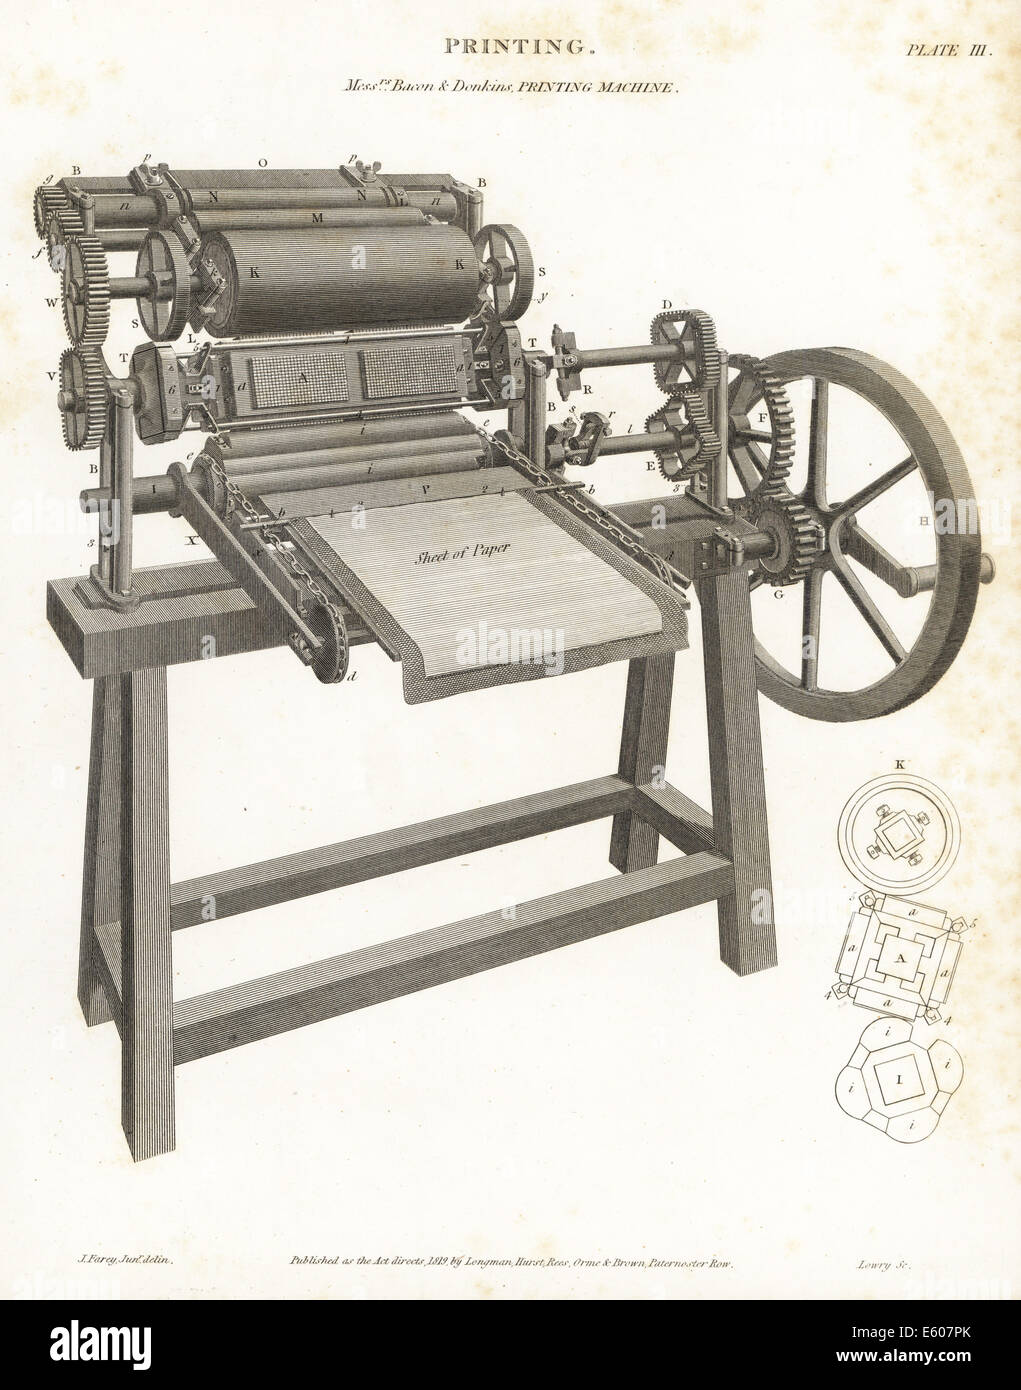 Prima pressa rotativa macchina da stampa brevettato da pancetta e Donkin, 1813. Foto Stock